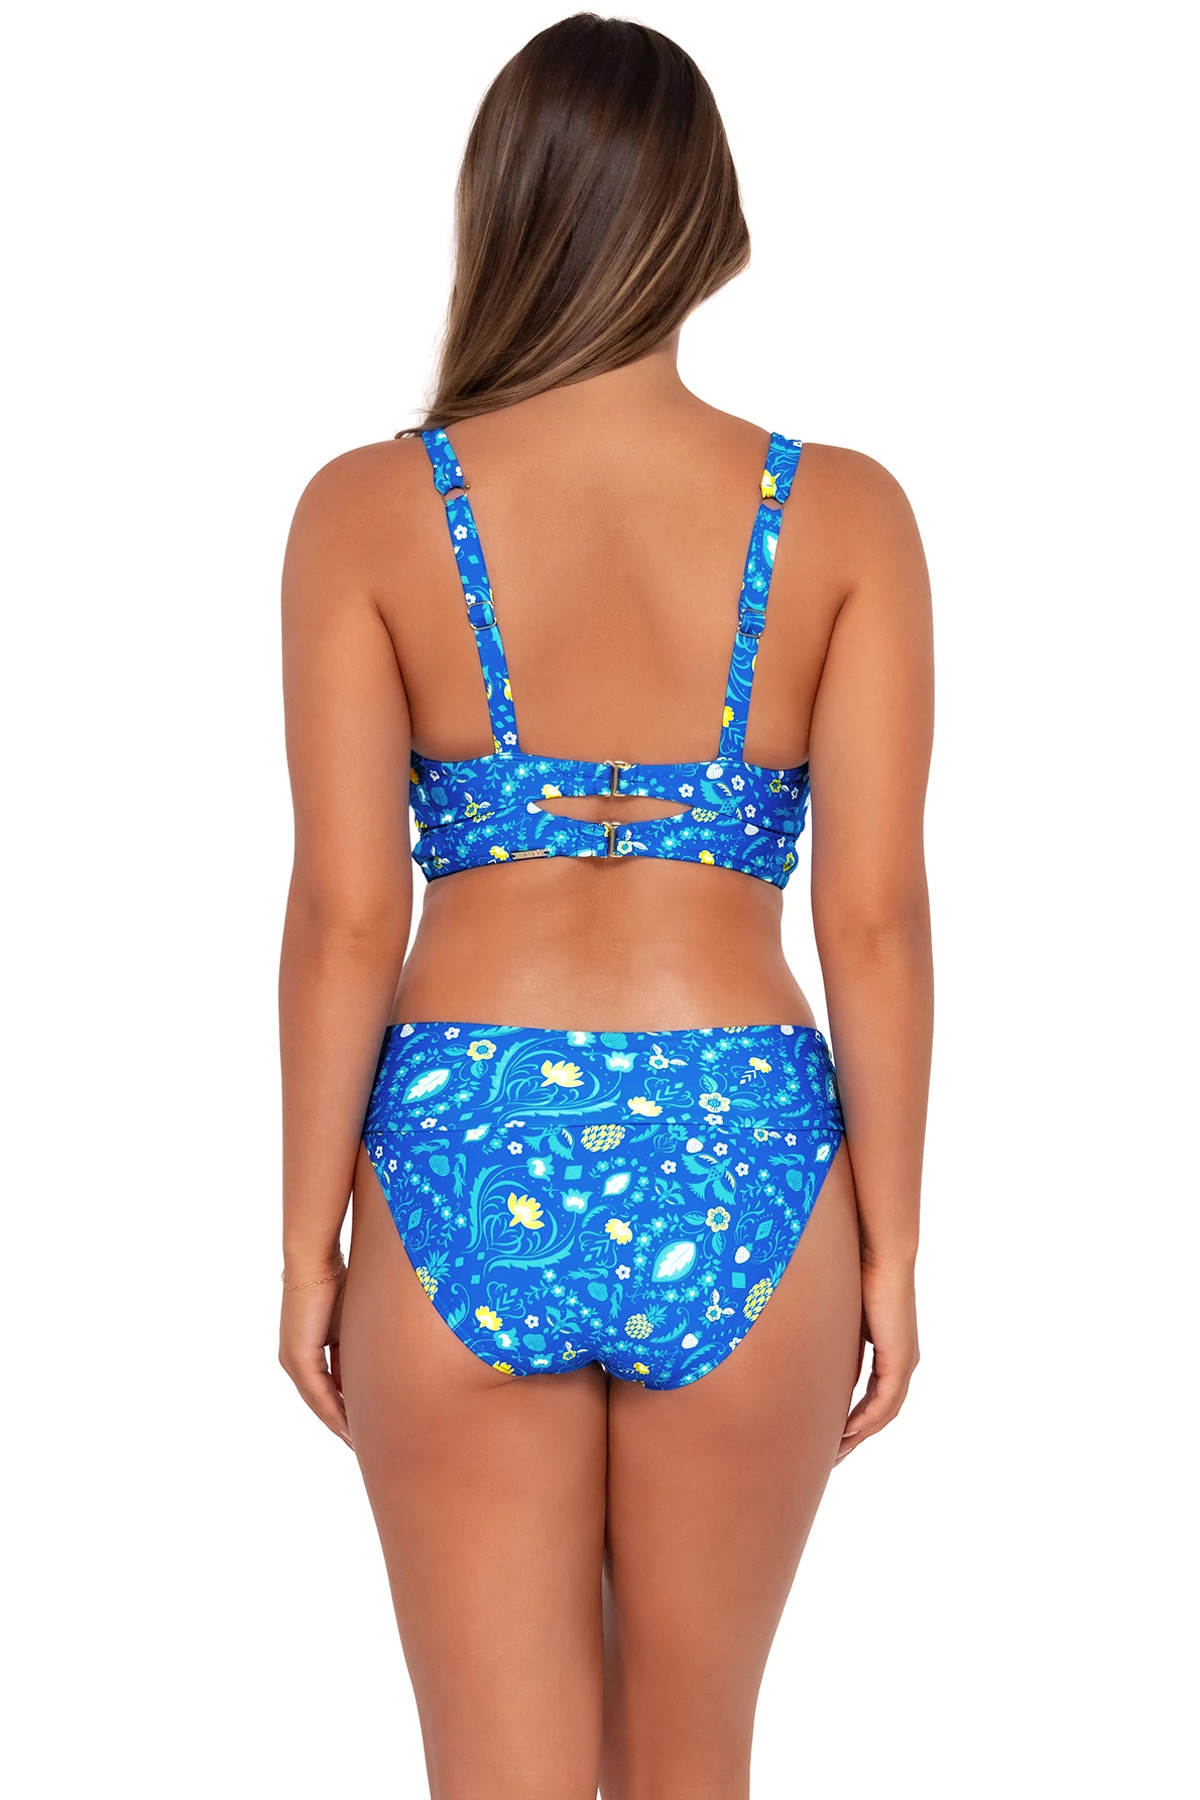 PINEAPPLE GROVE Danica Underwire Bikini Top (D+ Cup) image number 2